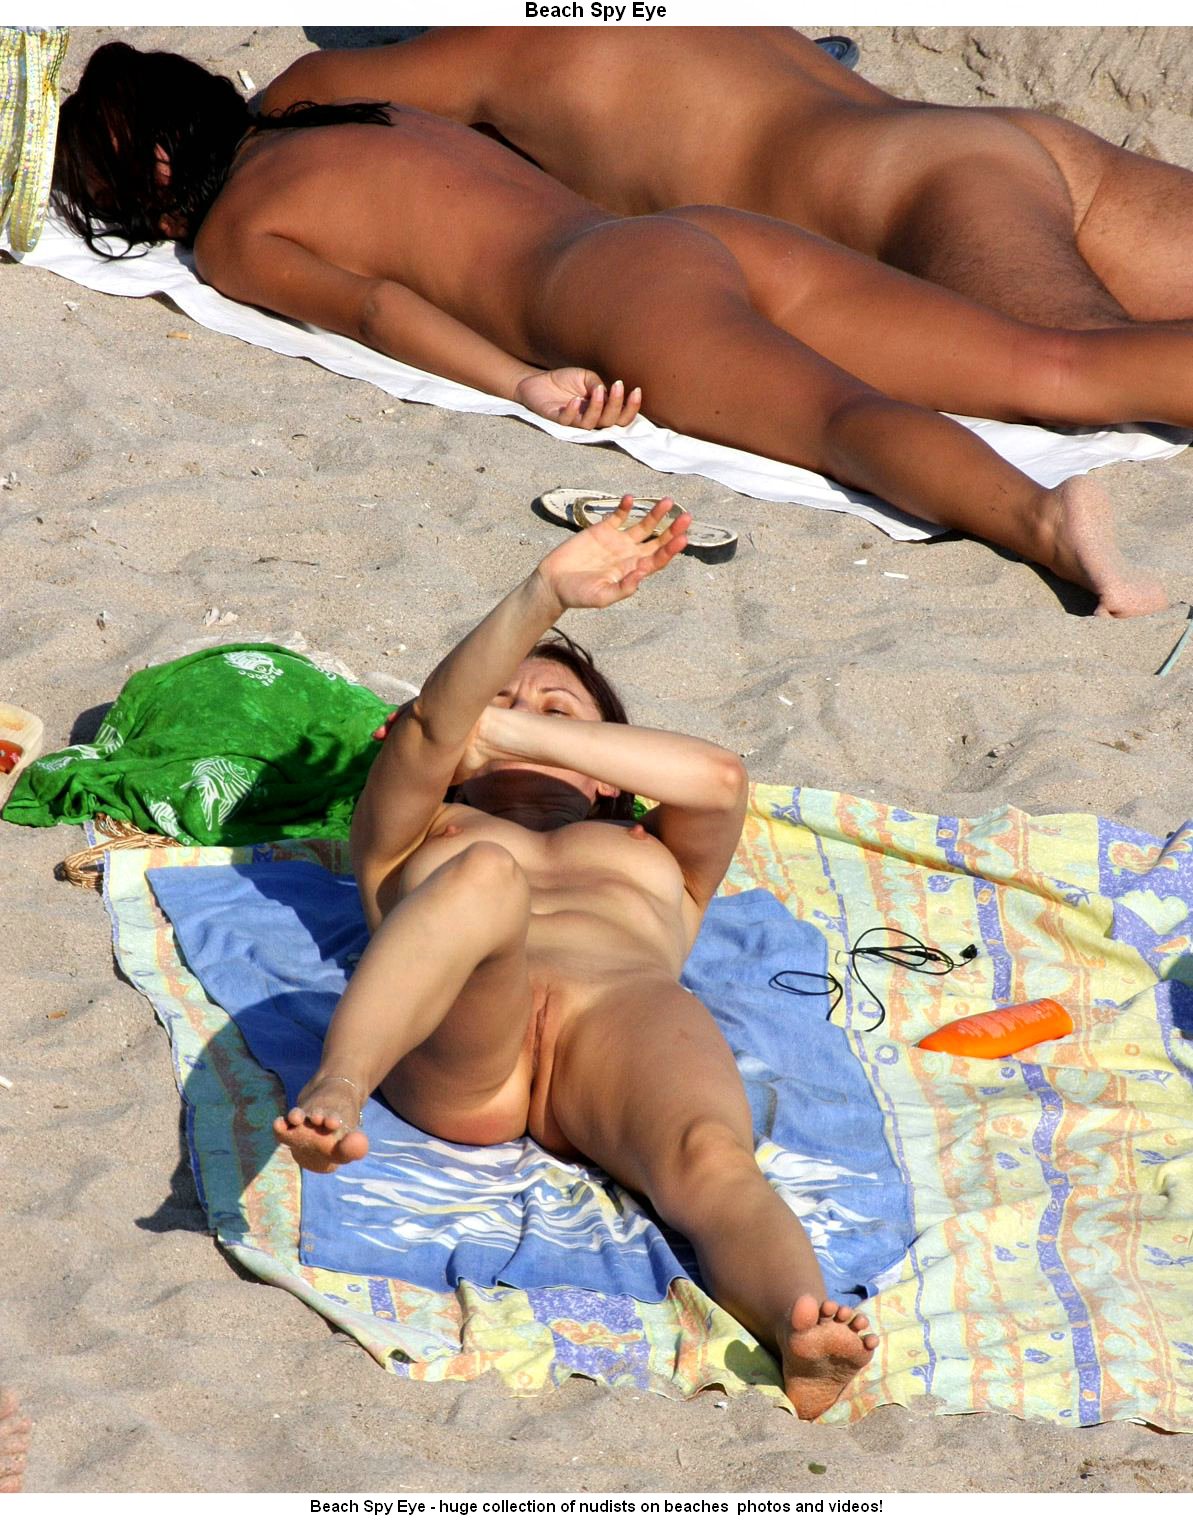 Nude Beaches Pics Nudist beach photos - beautiful girl nudists lie.. Image 8